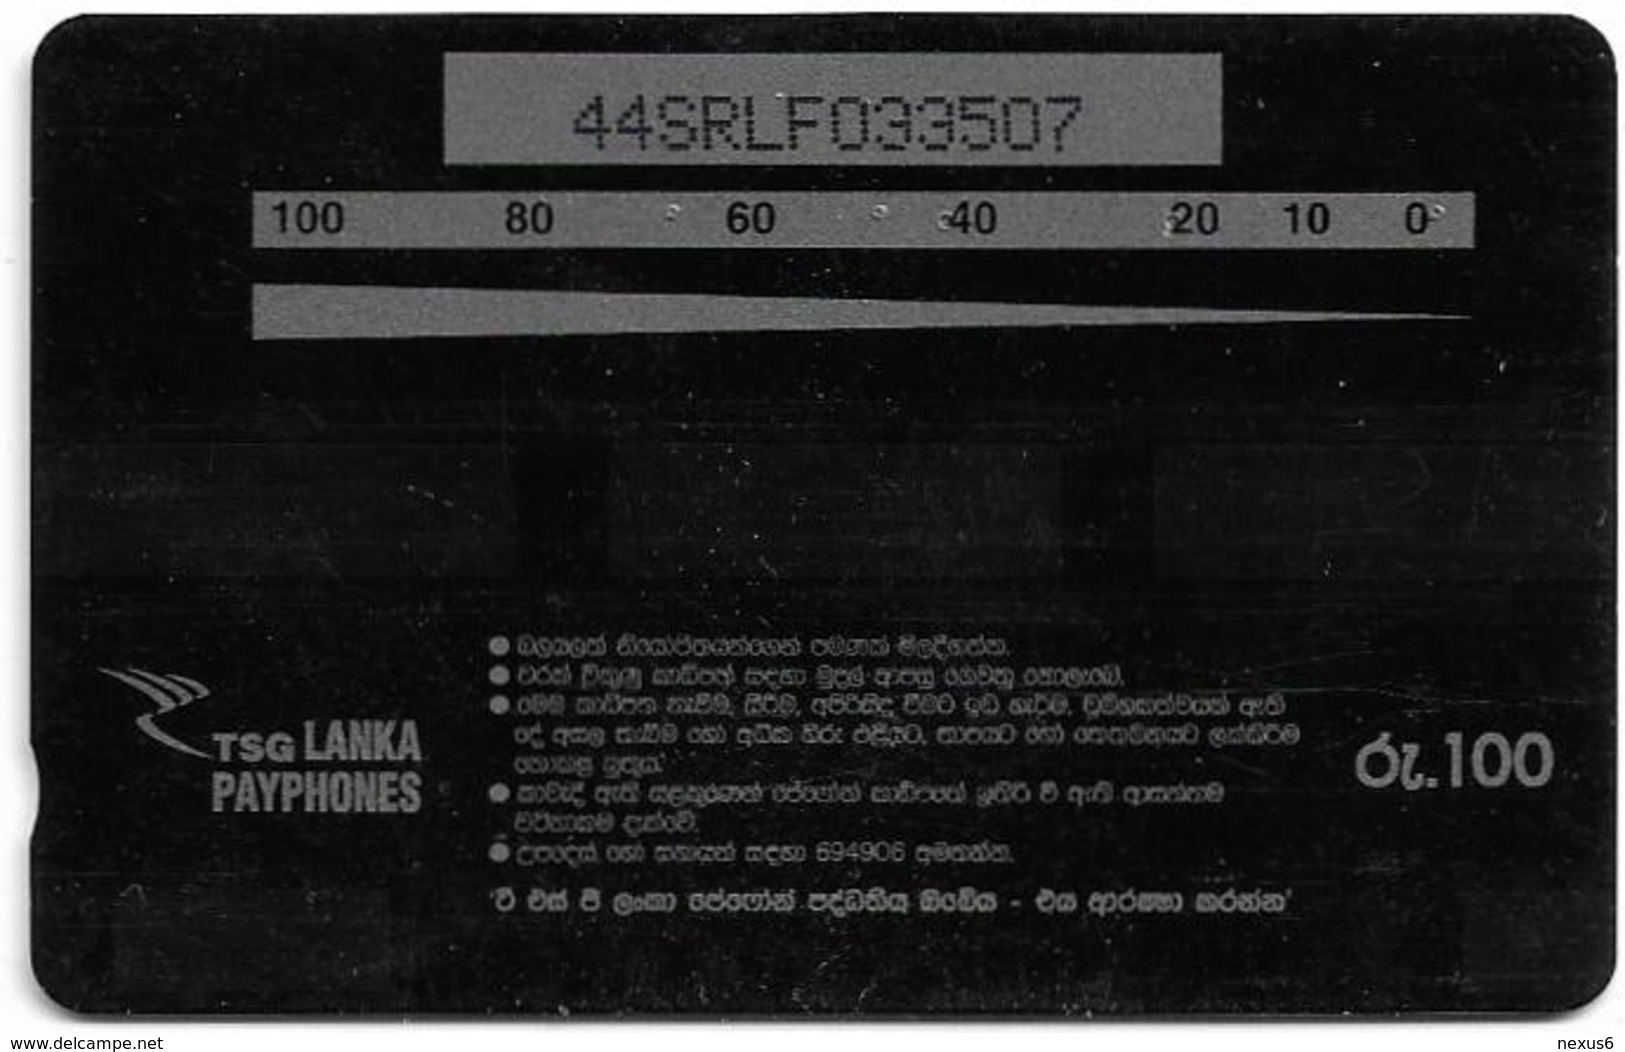 Sri Lanka - Lanka Pay Phones (GPT) - Flying Bird At Sunset - 44SRLF  (Normal Zero 0), 100Rs, Used - Sri Lanka (Ceylon)